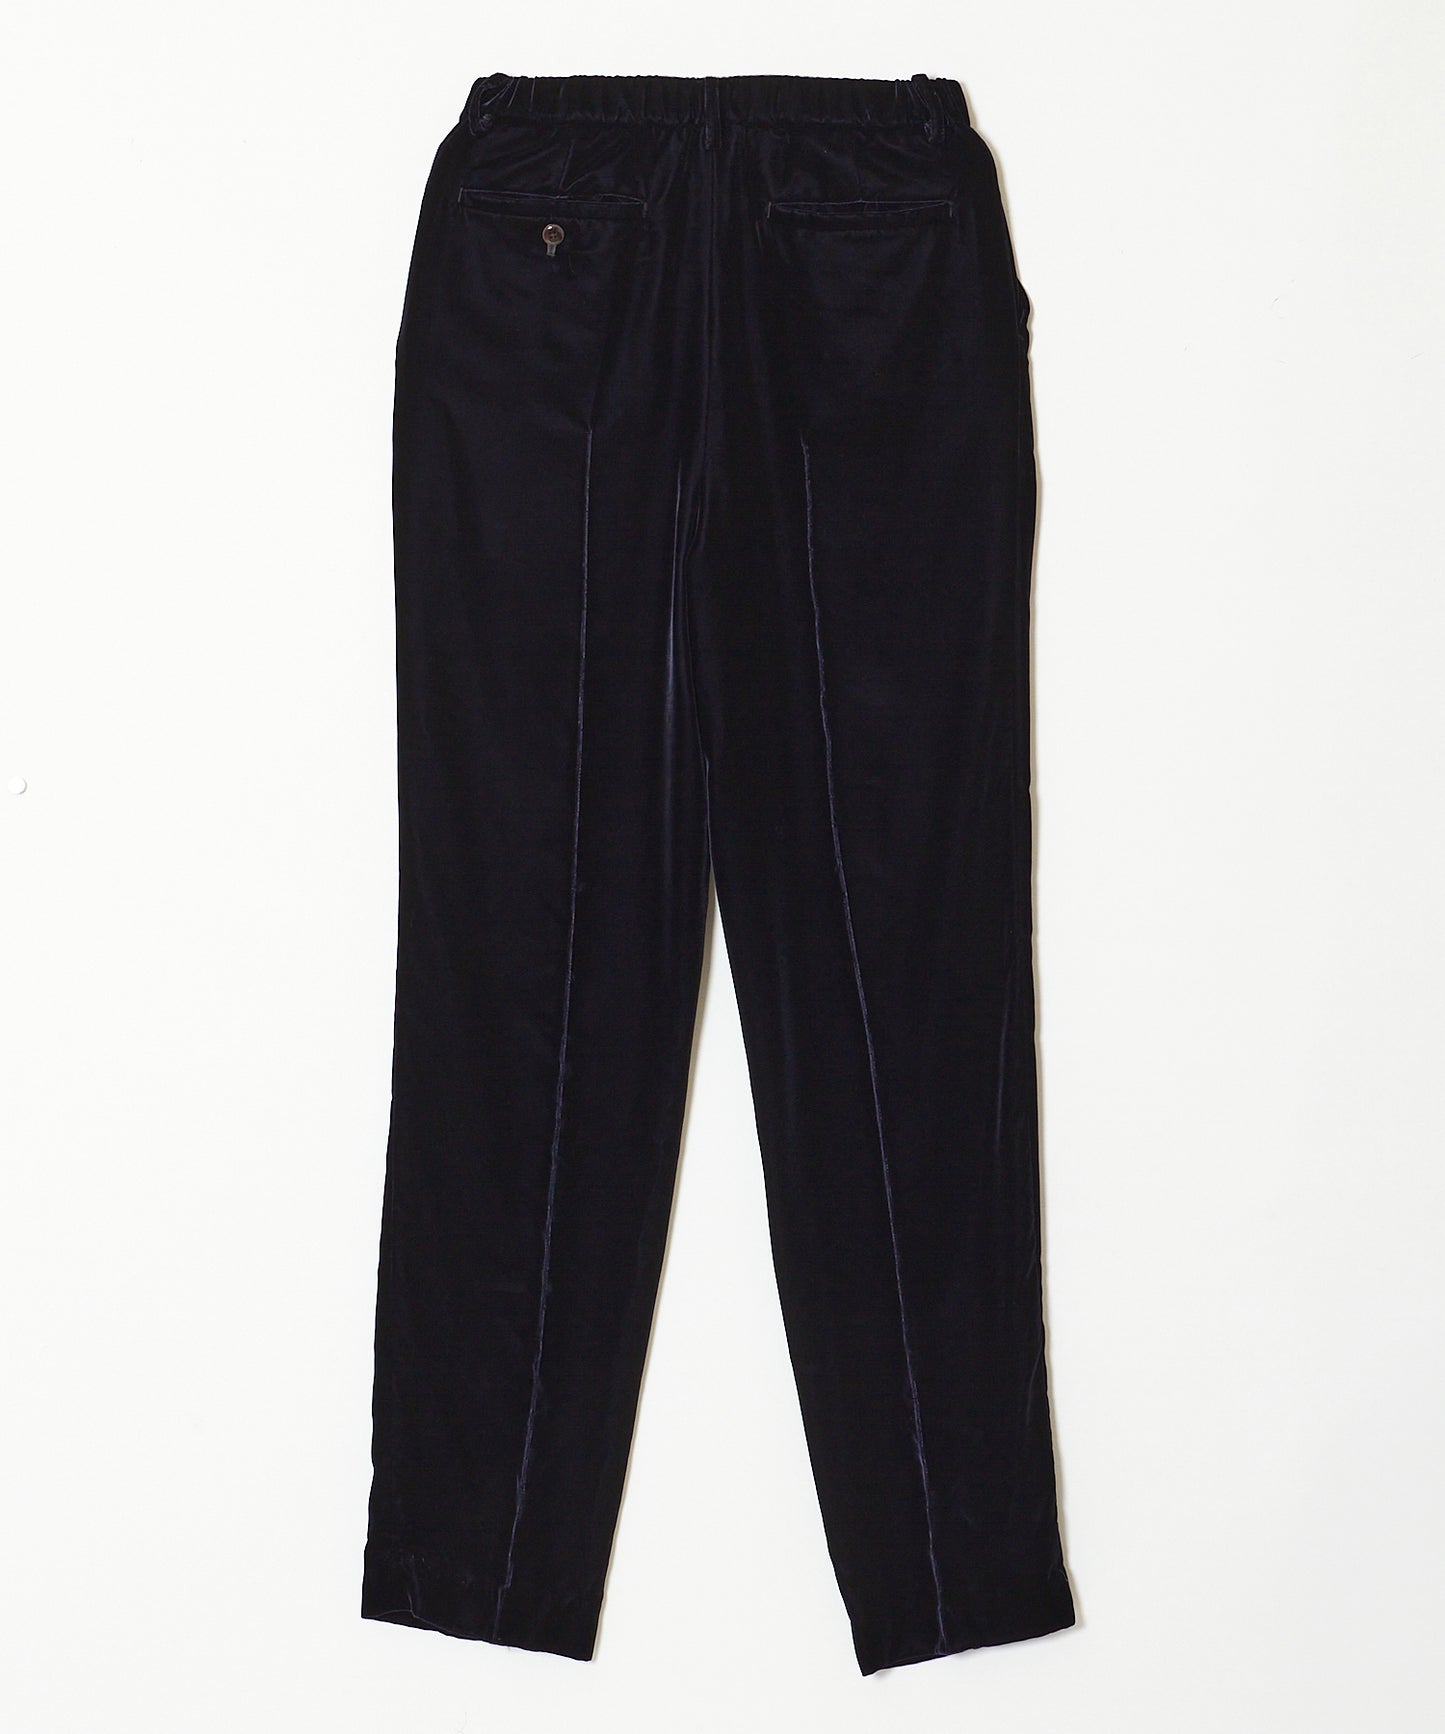 purple velvet pants【Delivery in January 2023】